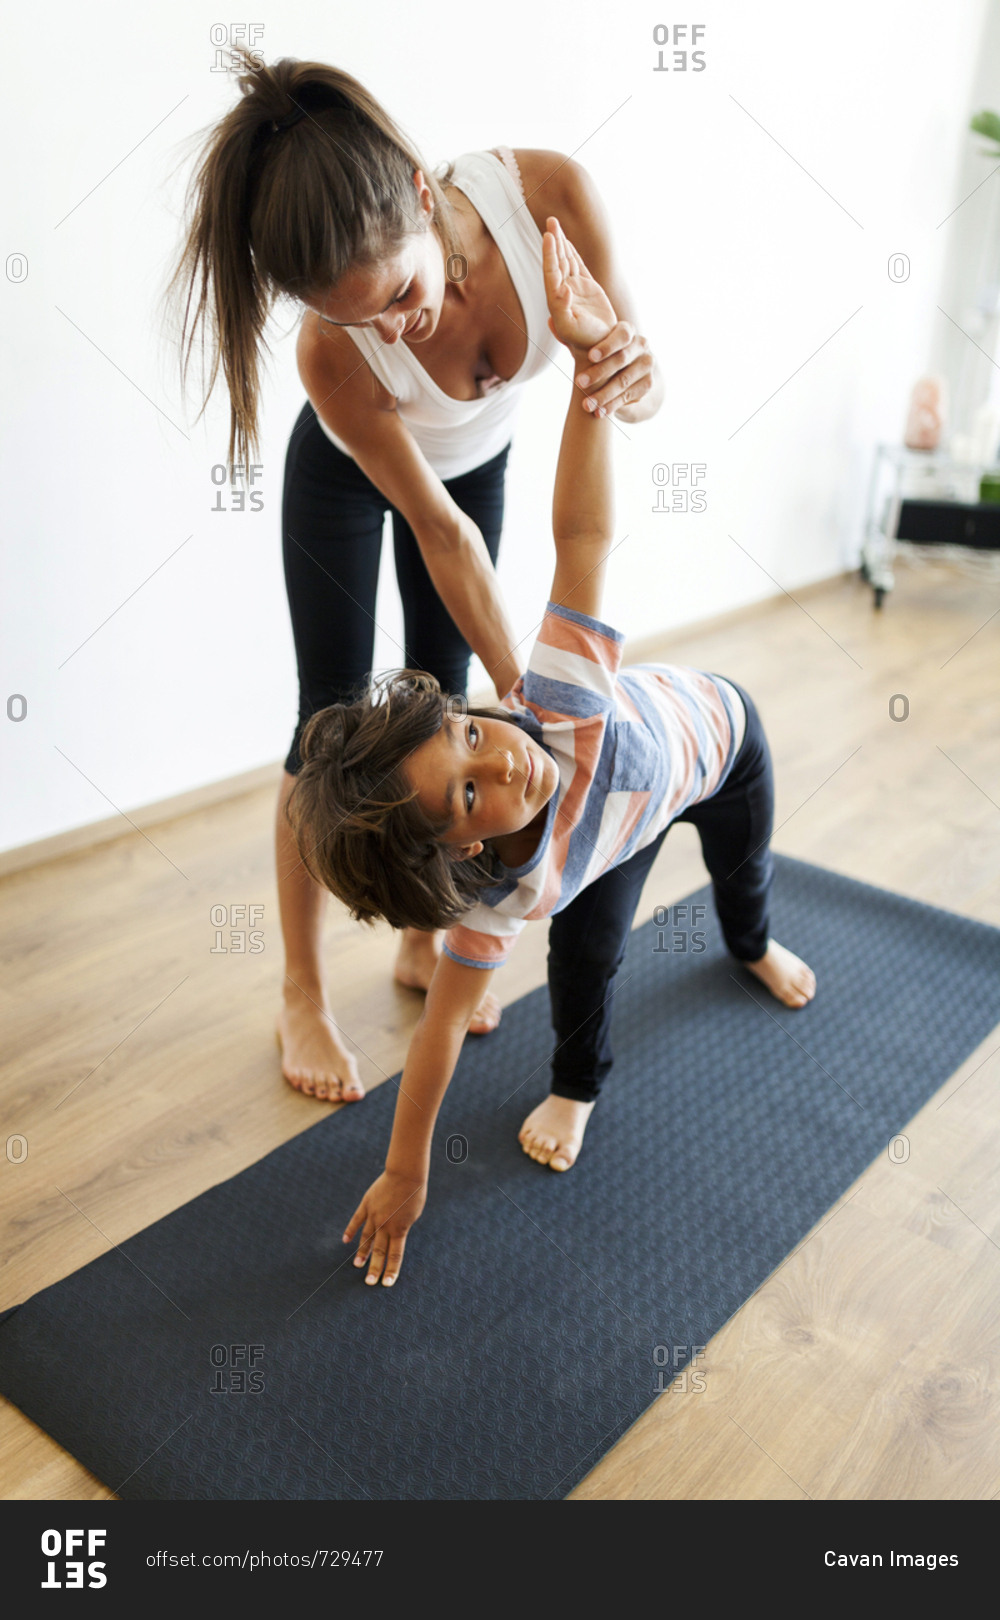 Yoga instructor assisting boy in exercising at yoga studio